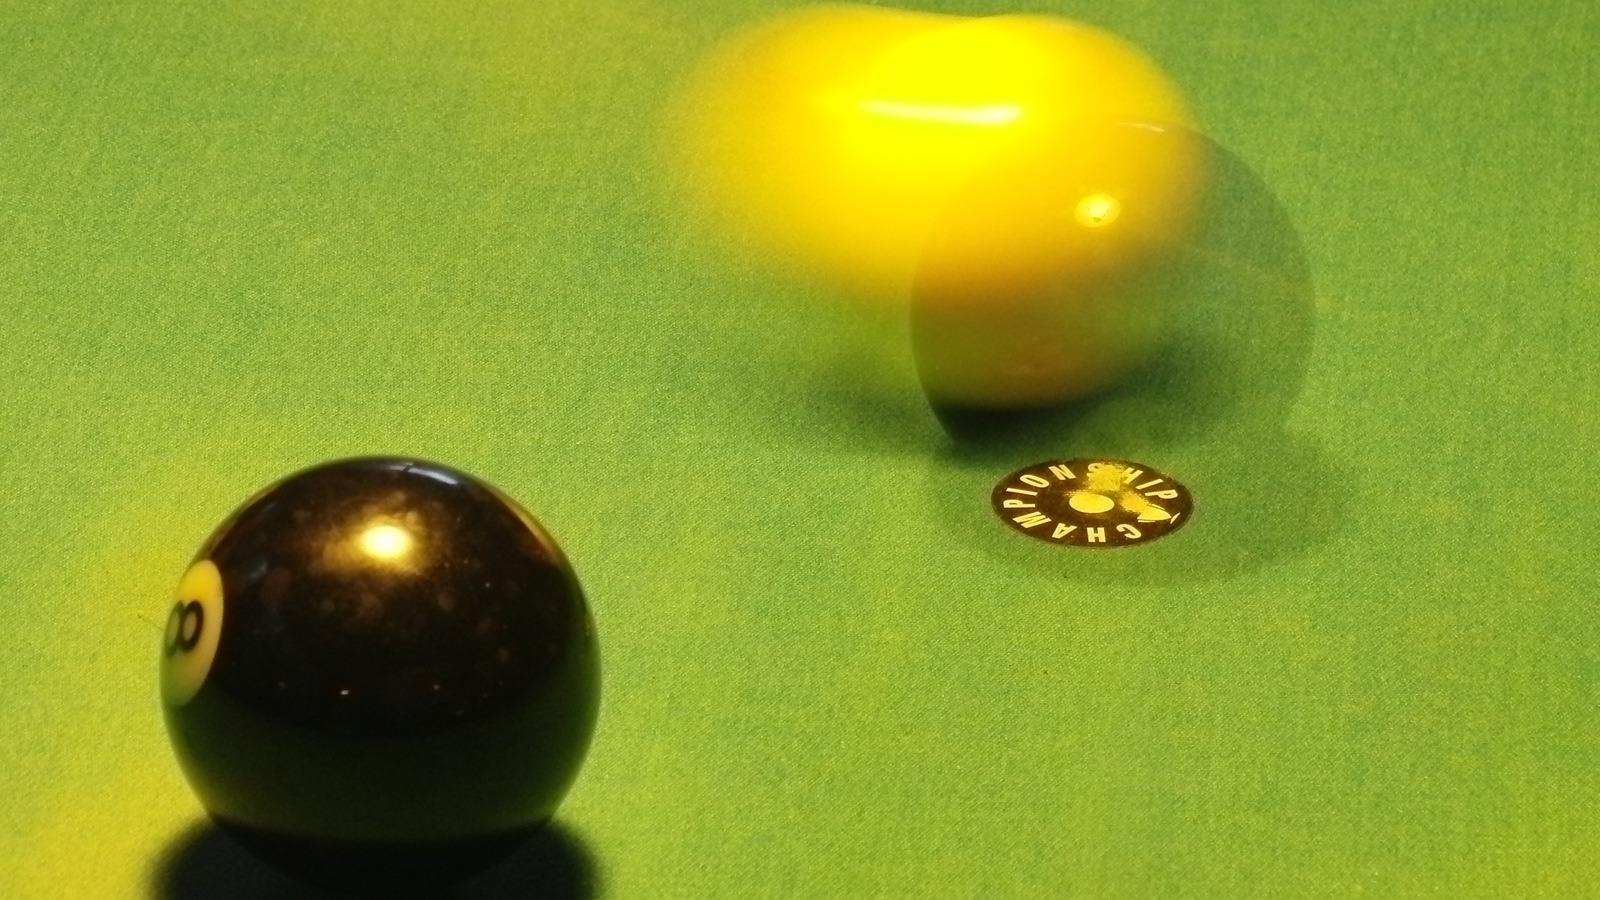 Basic shot types in Pocket Billiards